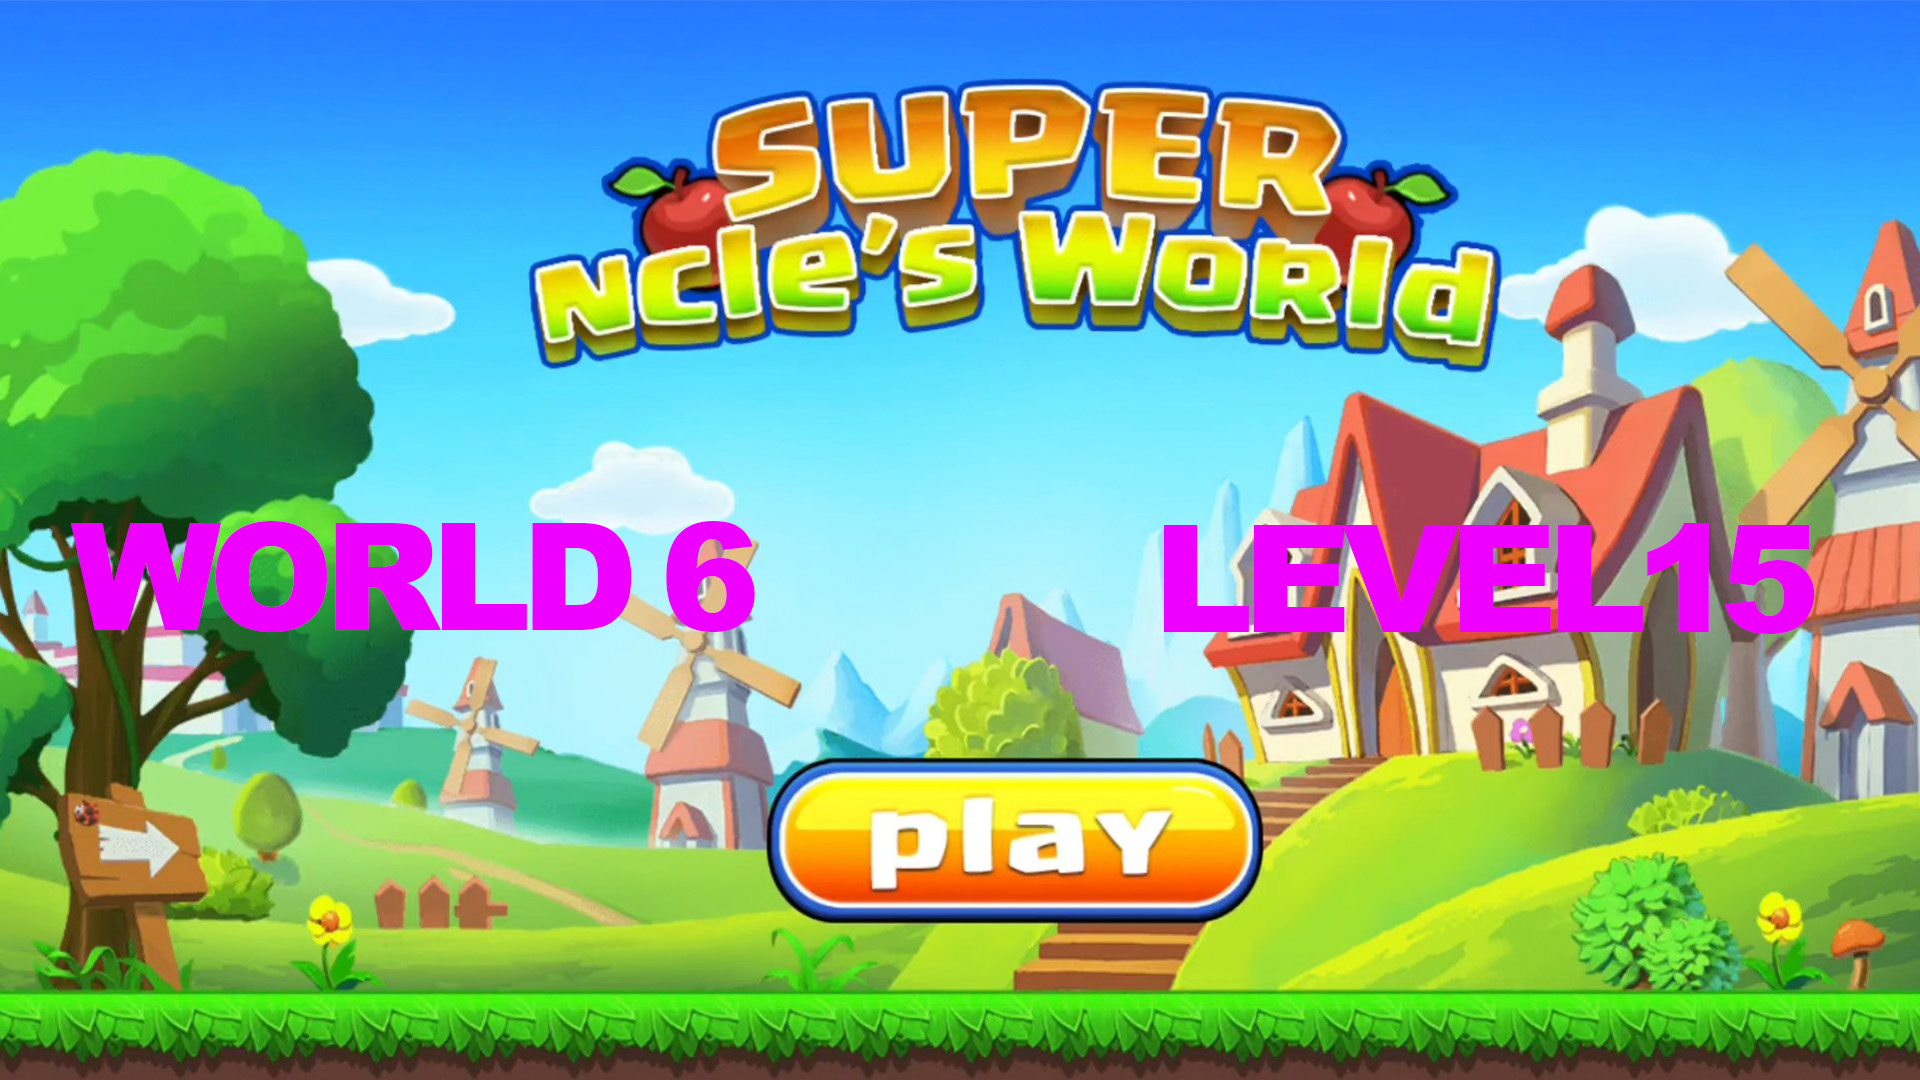 Super ncle's  World 6. Level 15.